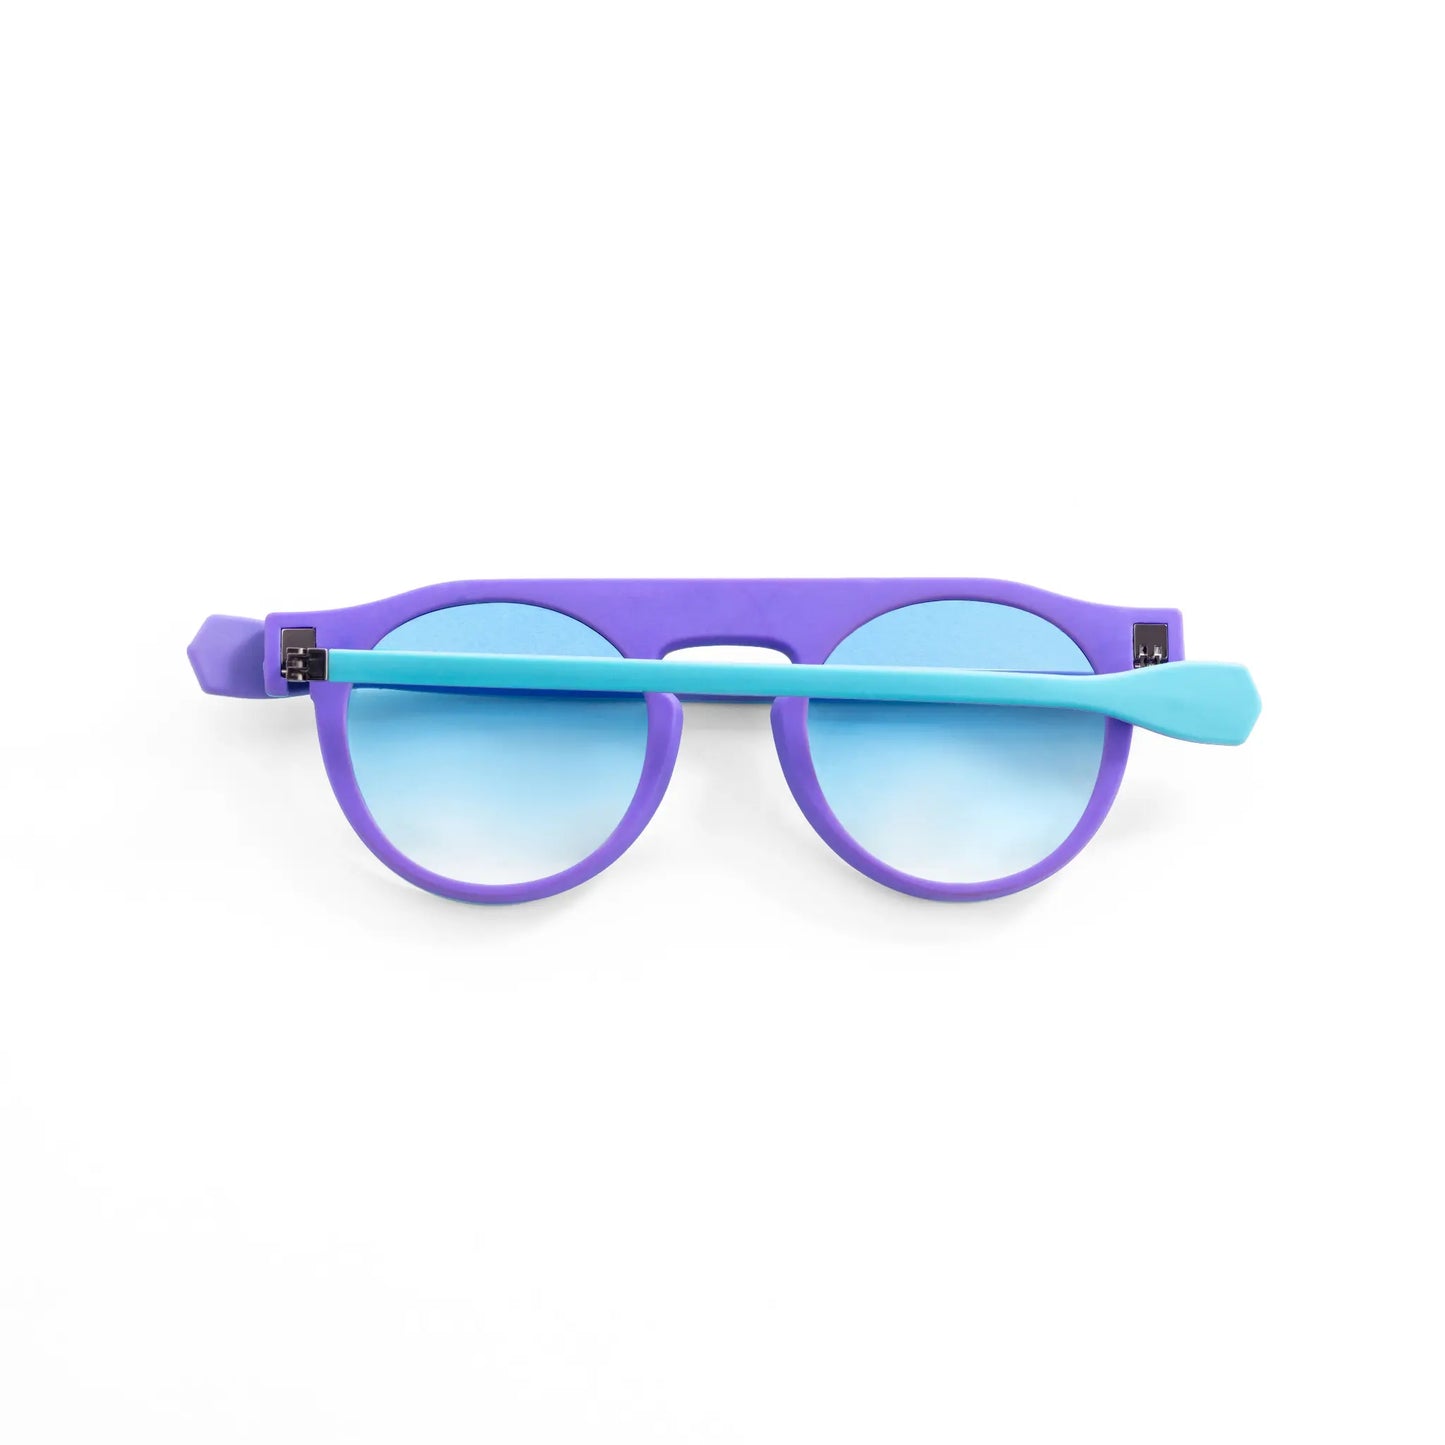 Reverso sunglasses Light Blue & purple reversible & ultra light back view